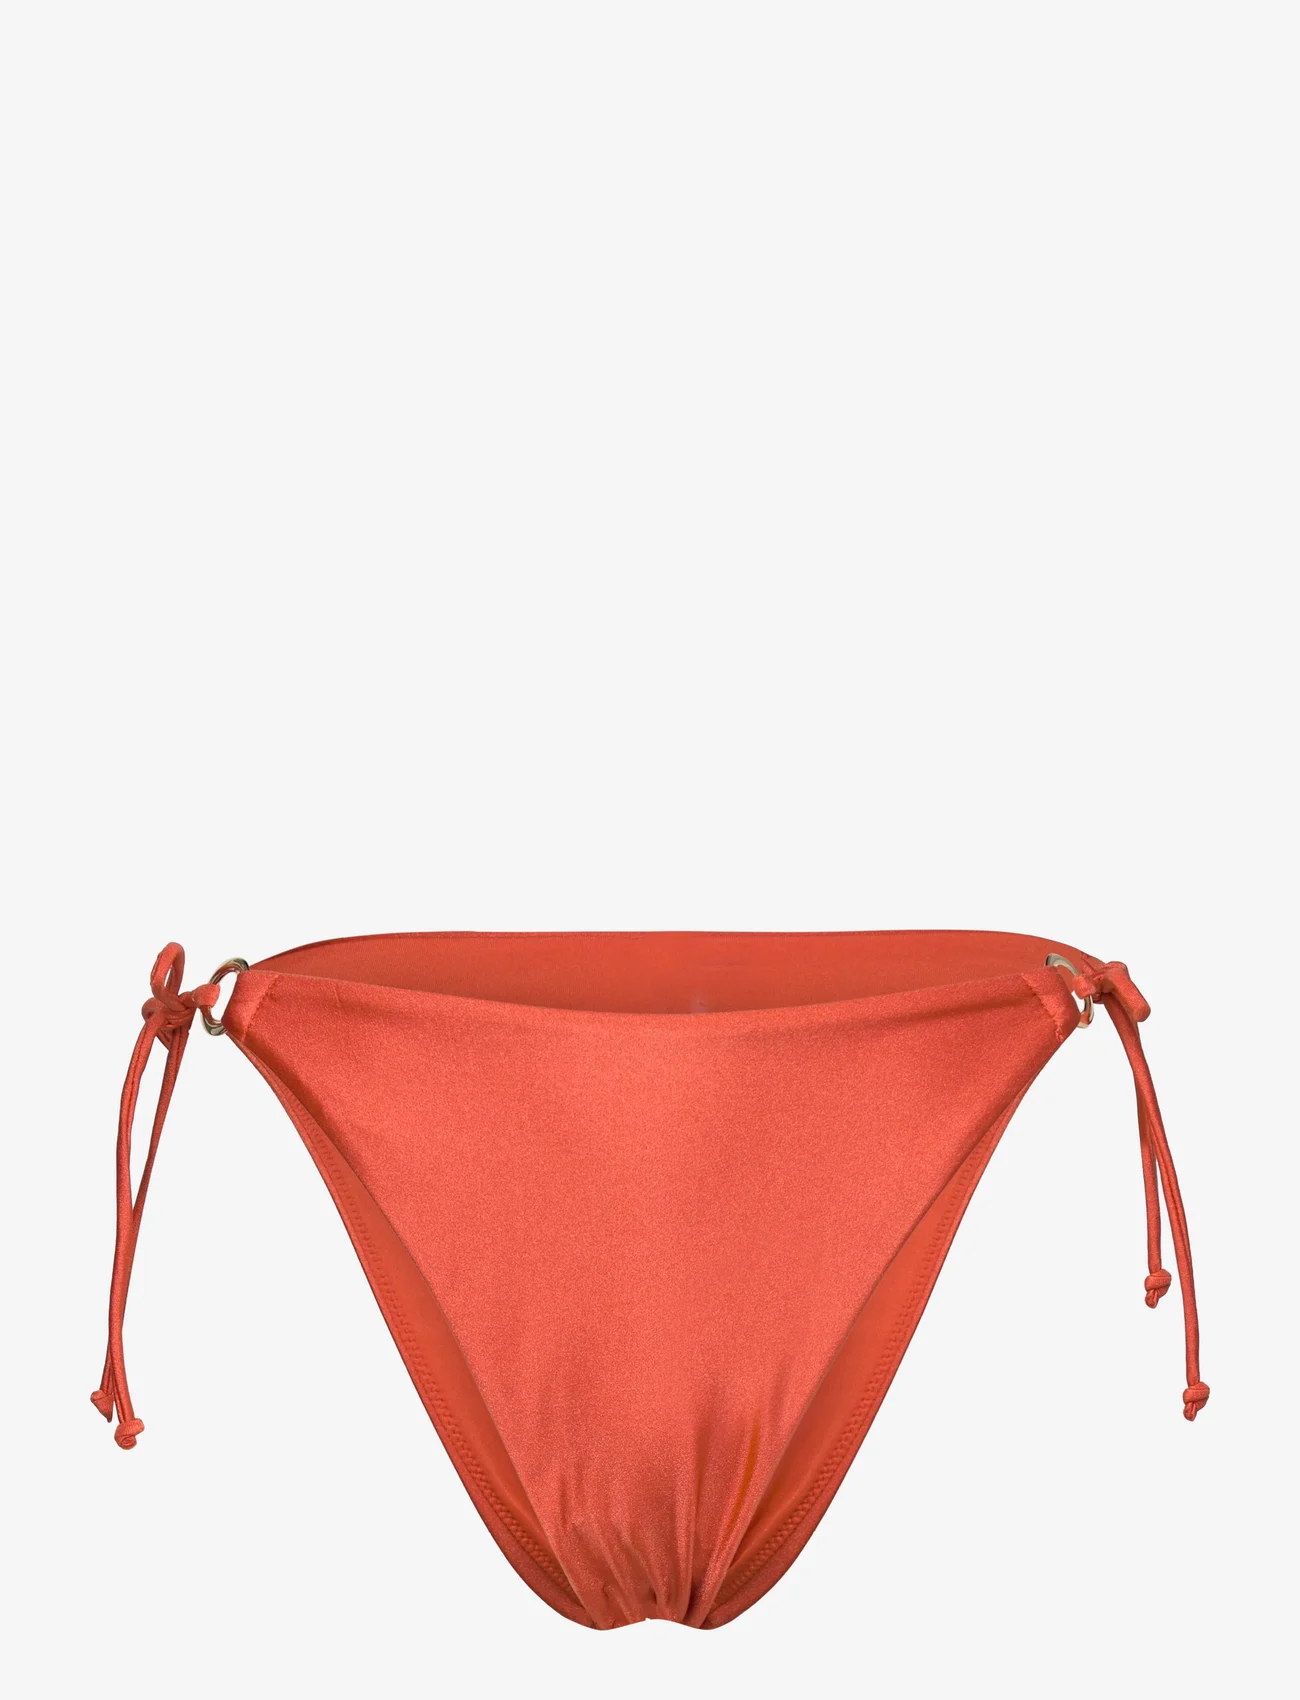 Hunkemöller - Corfu high leg t - solmittavat bikinihousut - orange - 0